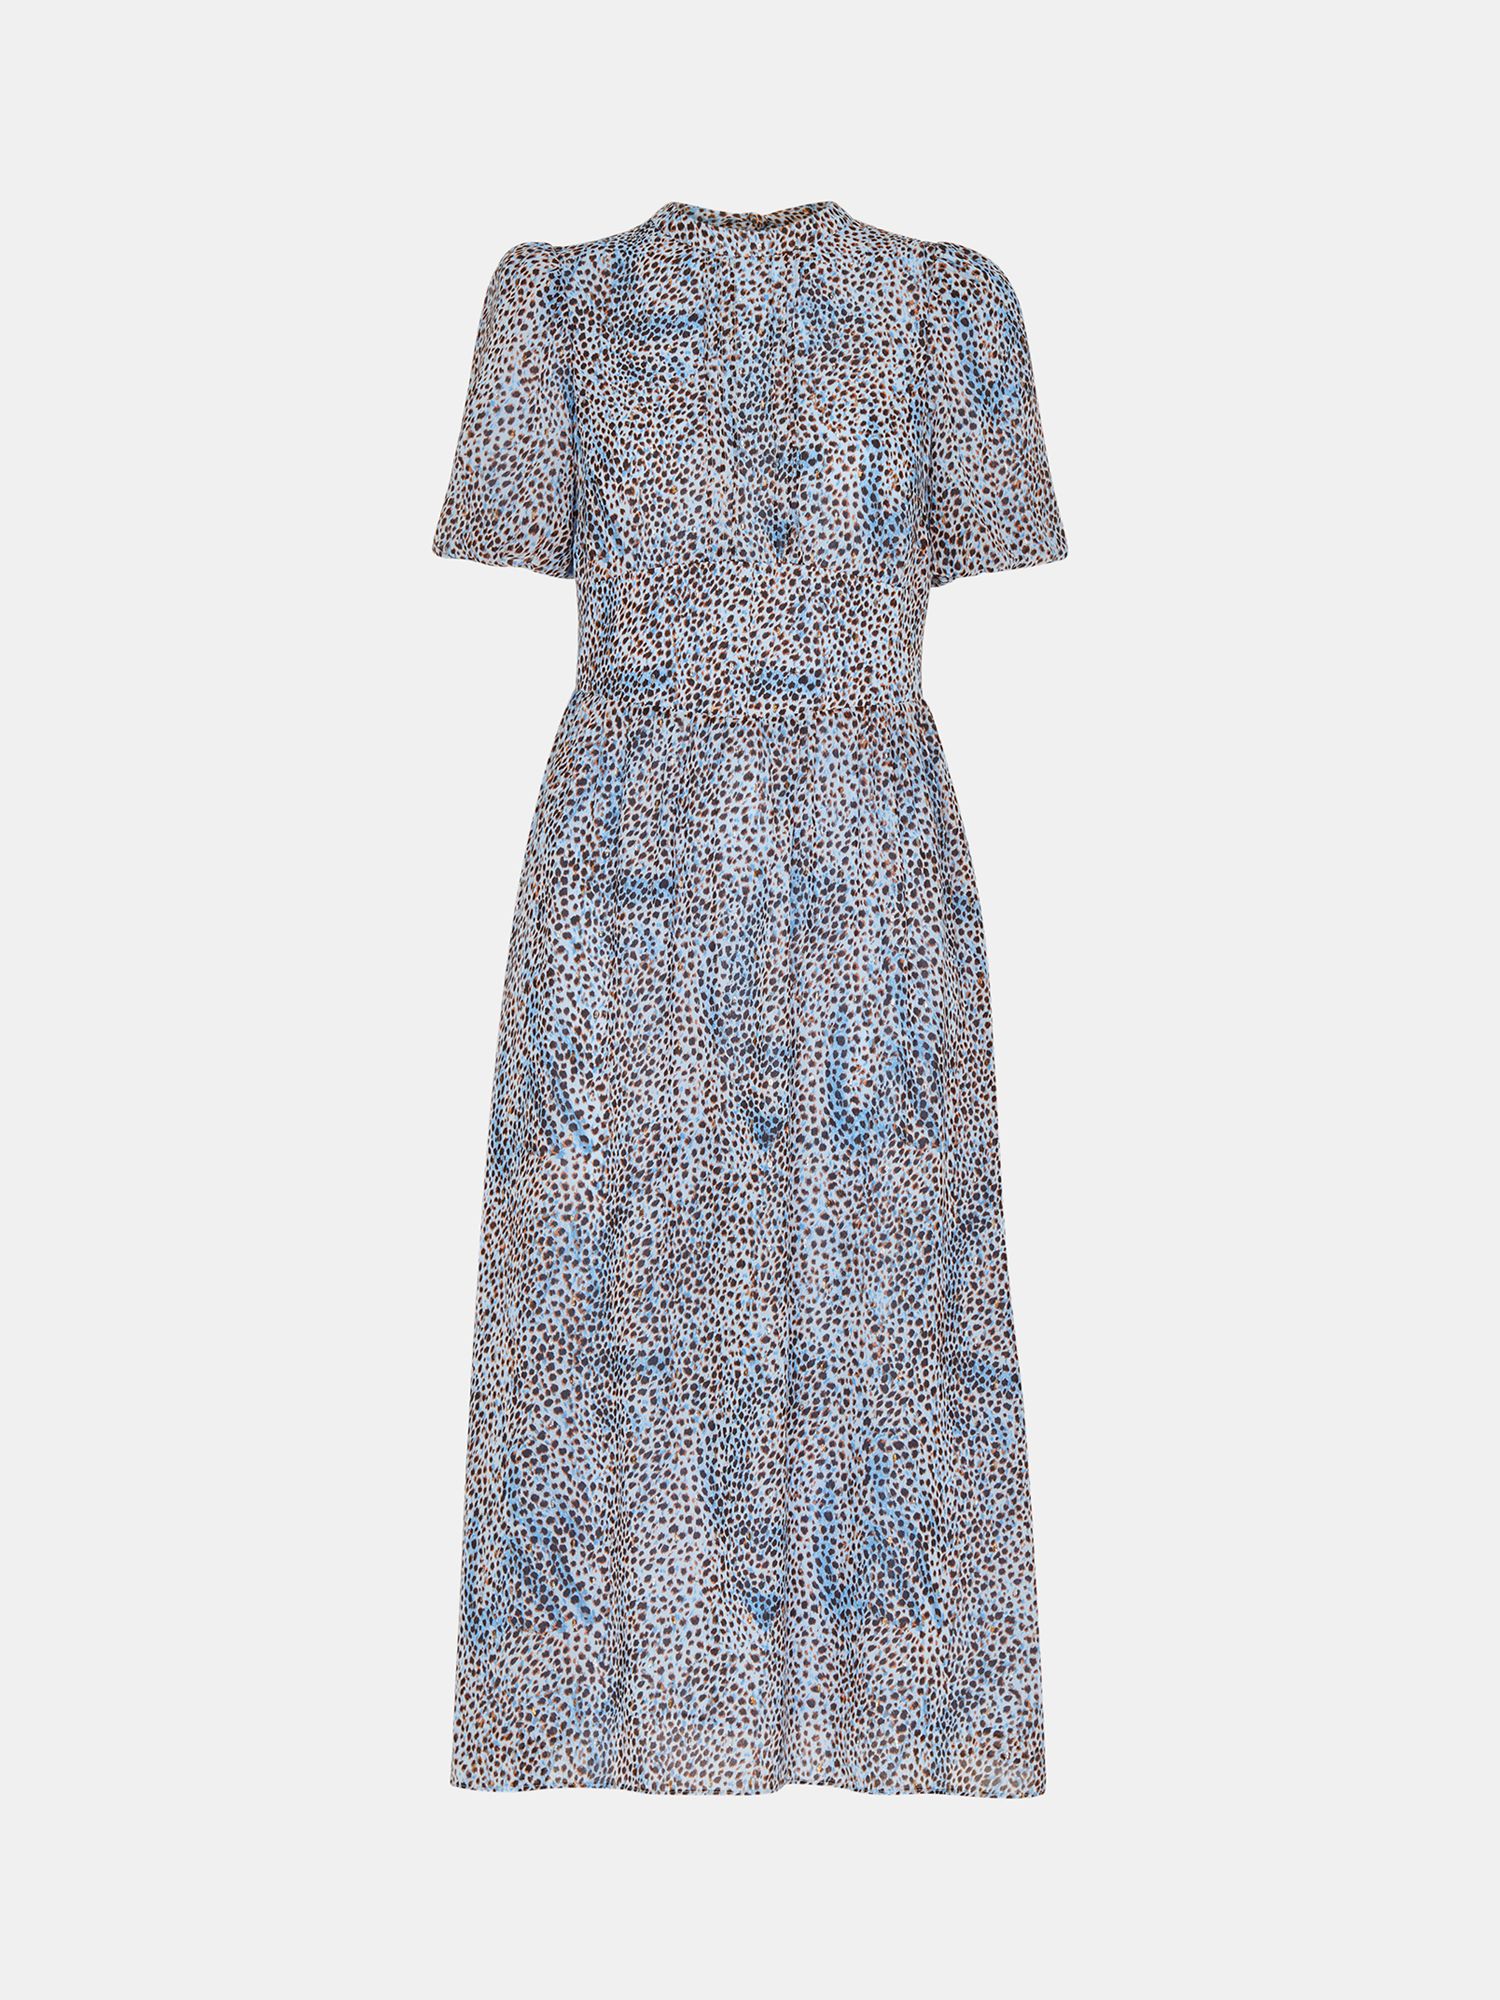 Whistles Ink Spot Blair Dress, Blue/Multi at John Lewis & Partners